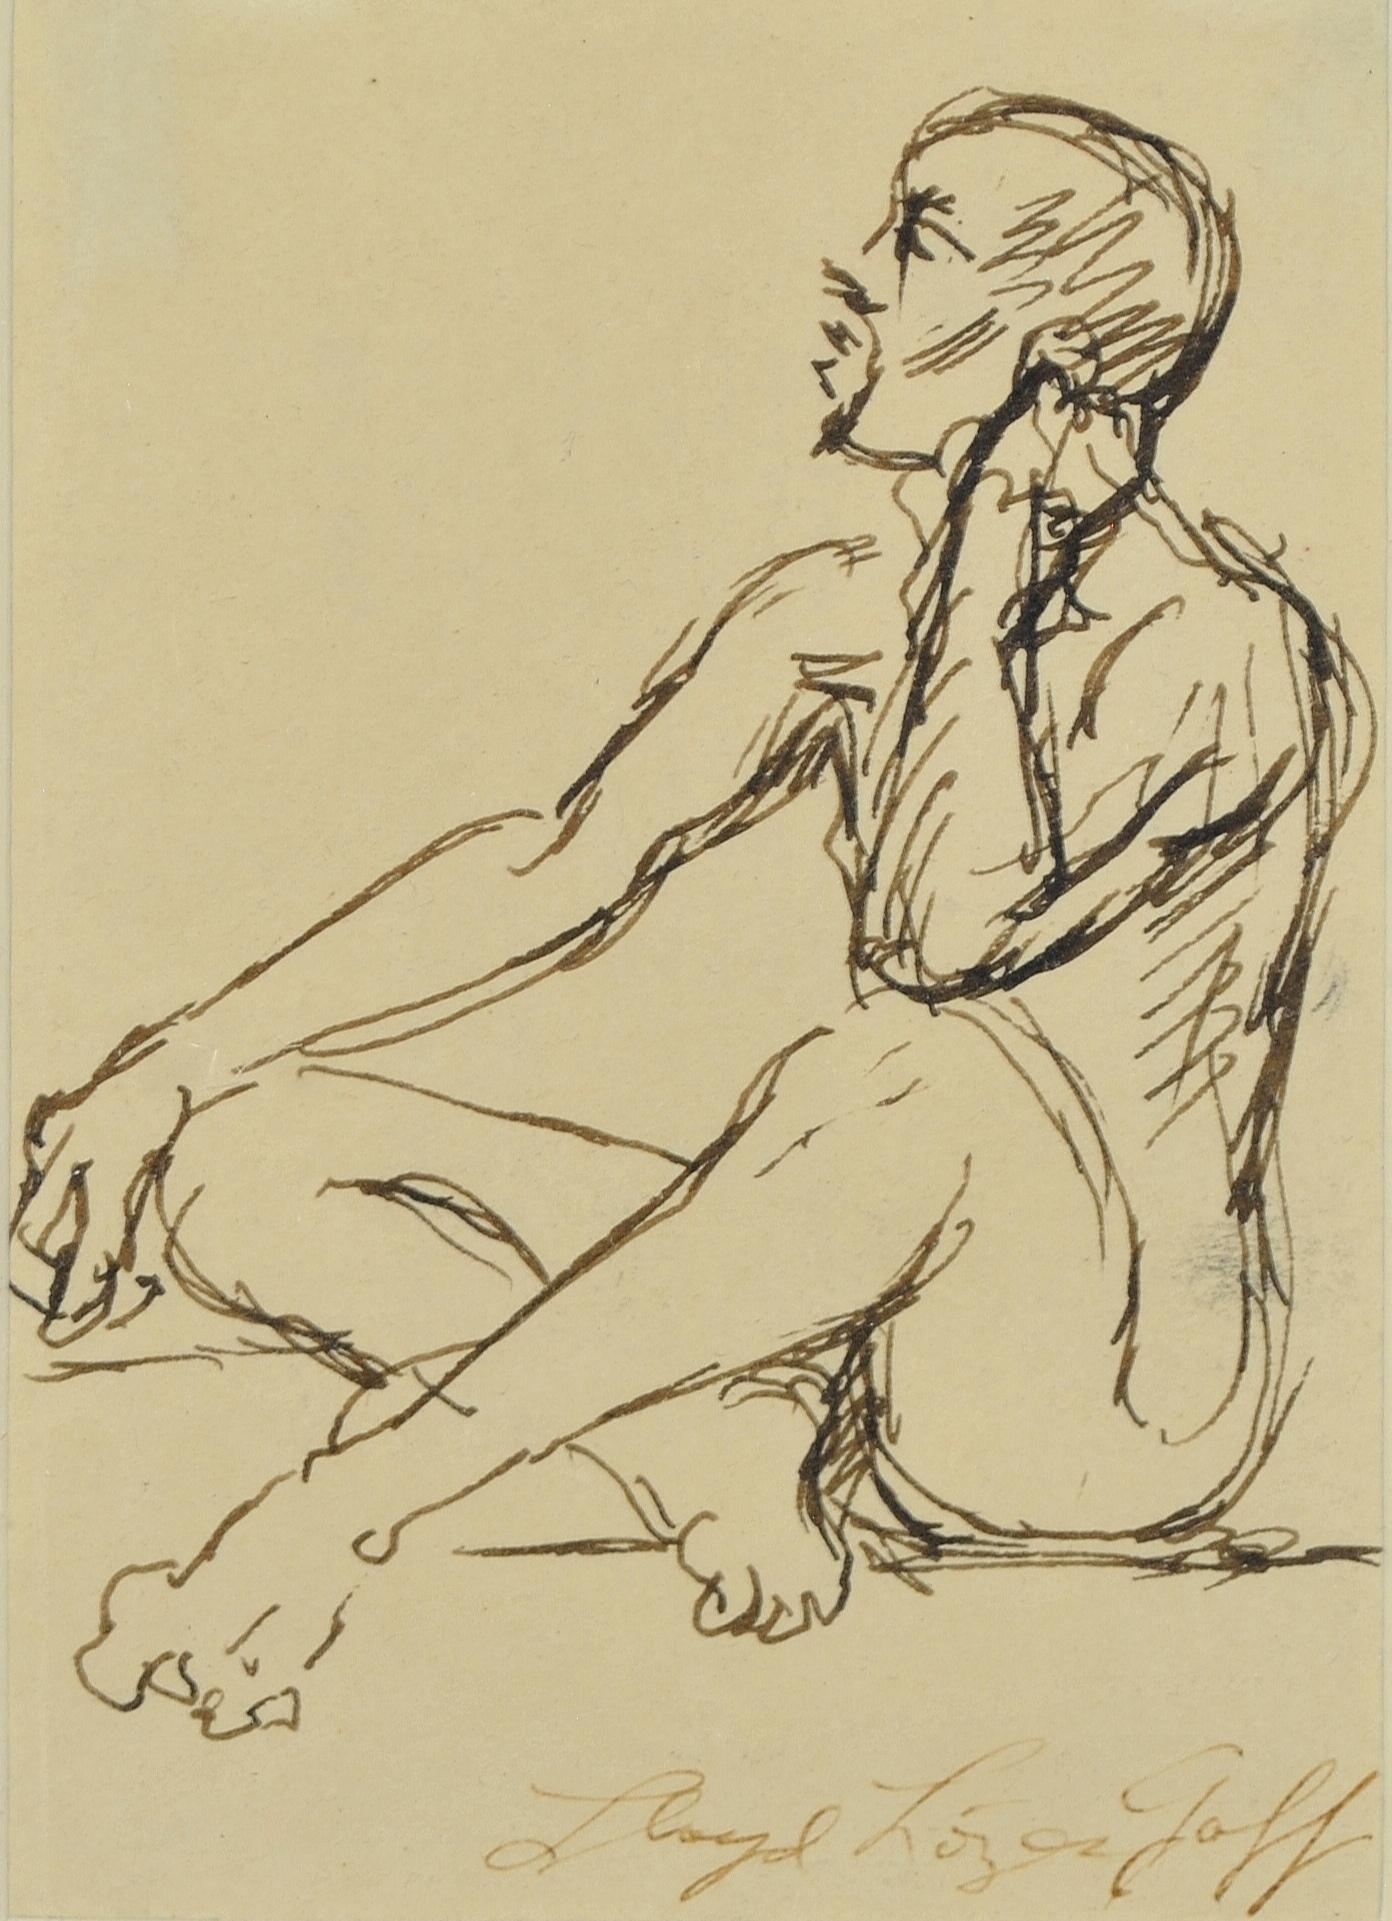 Listening - MId 20th Century American Figurative Portrait Study of a Seated Man - Art by Lloyd Lozes Goff